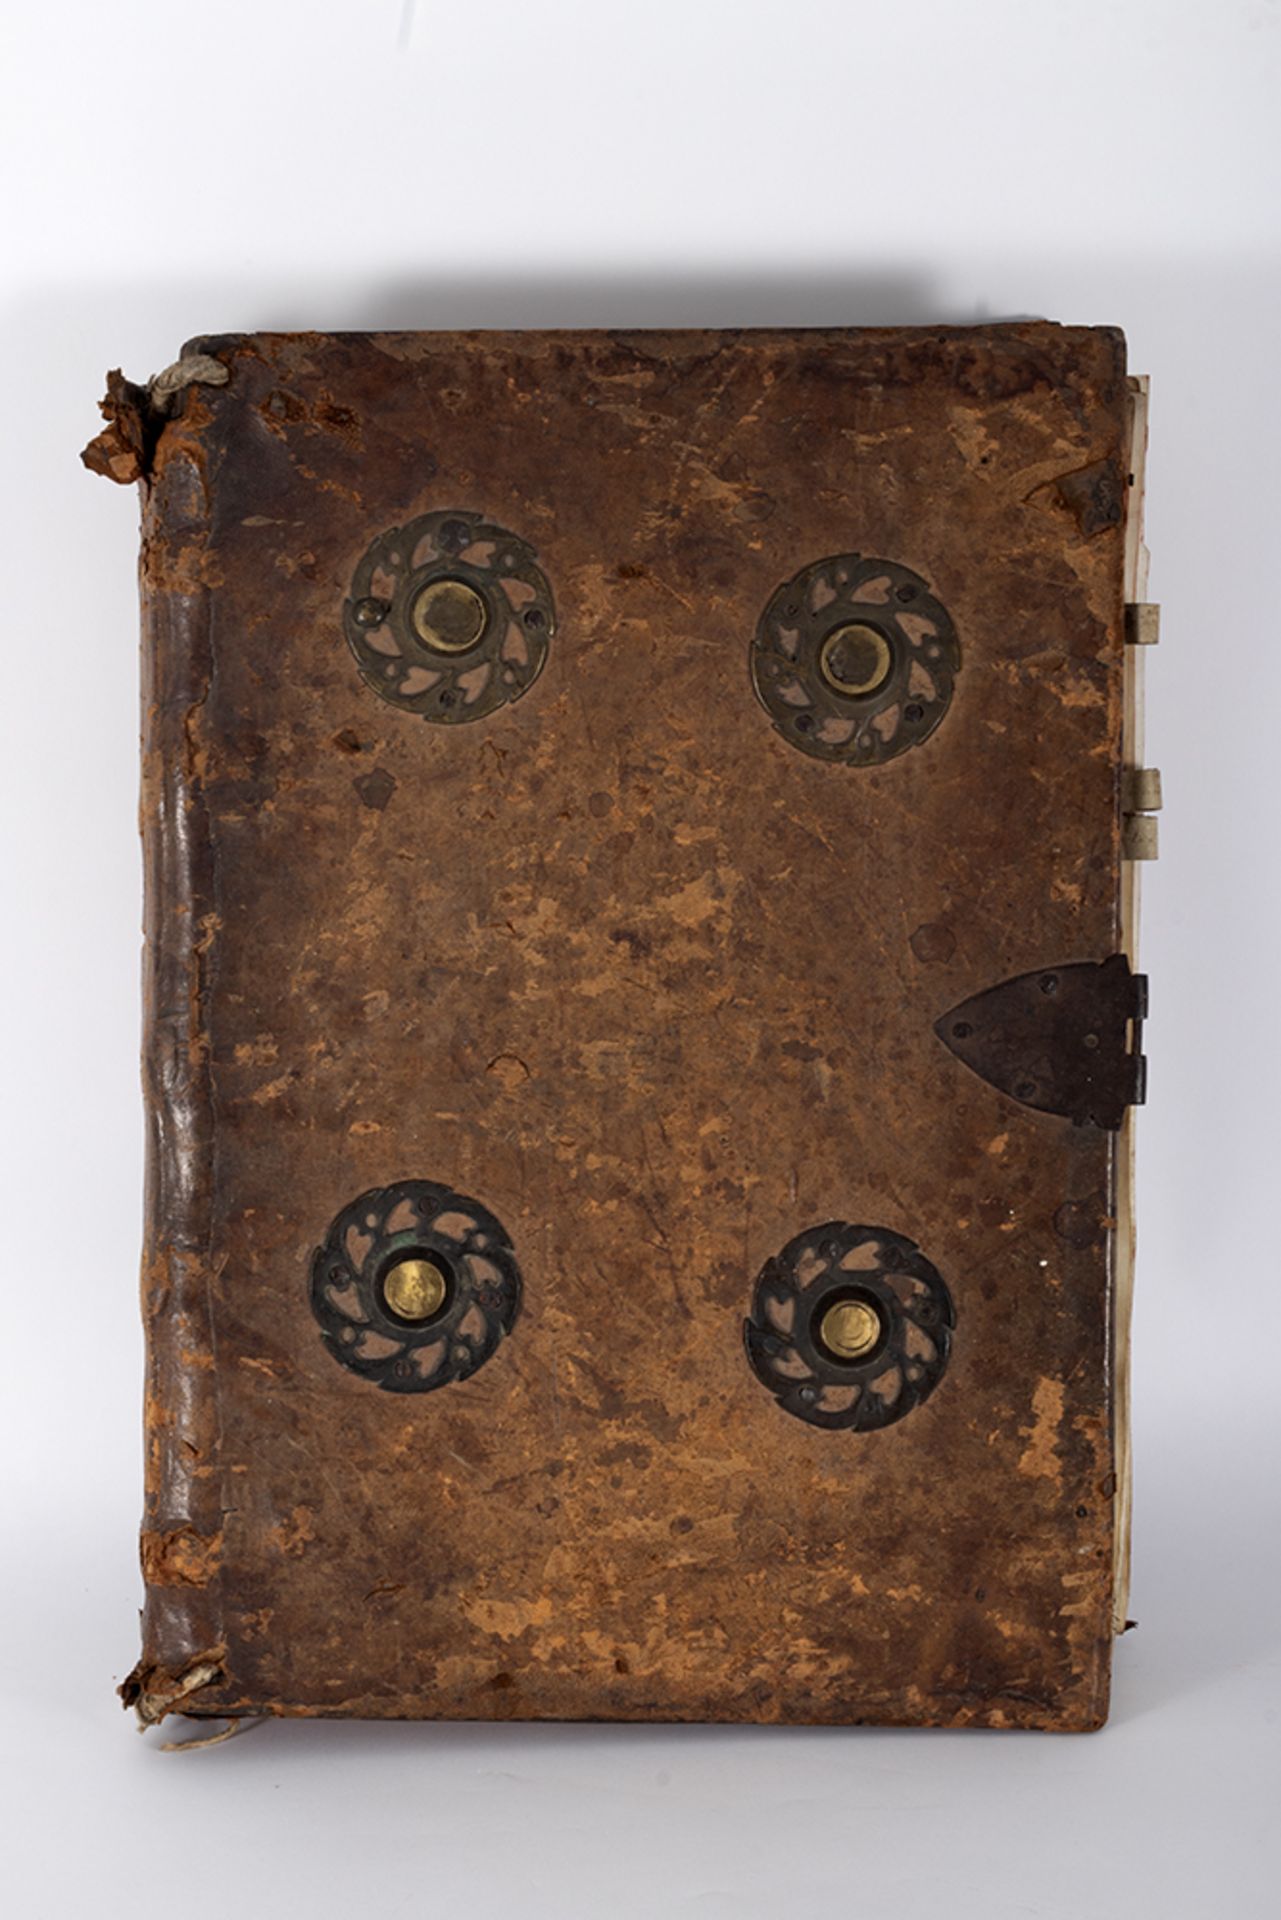 Cantoral or choir book manuscript in Latin on parchment. - Bild 2 aus 2